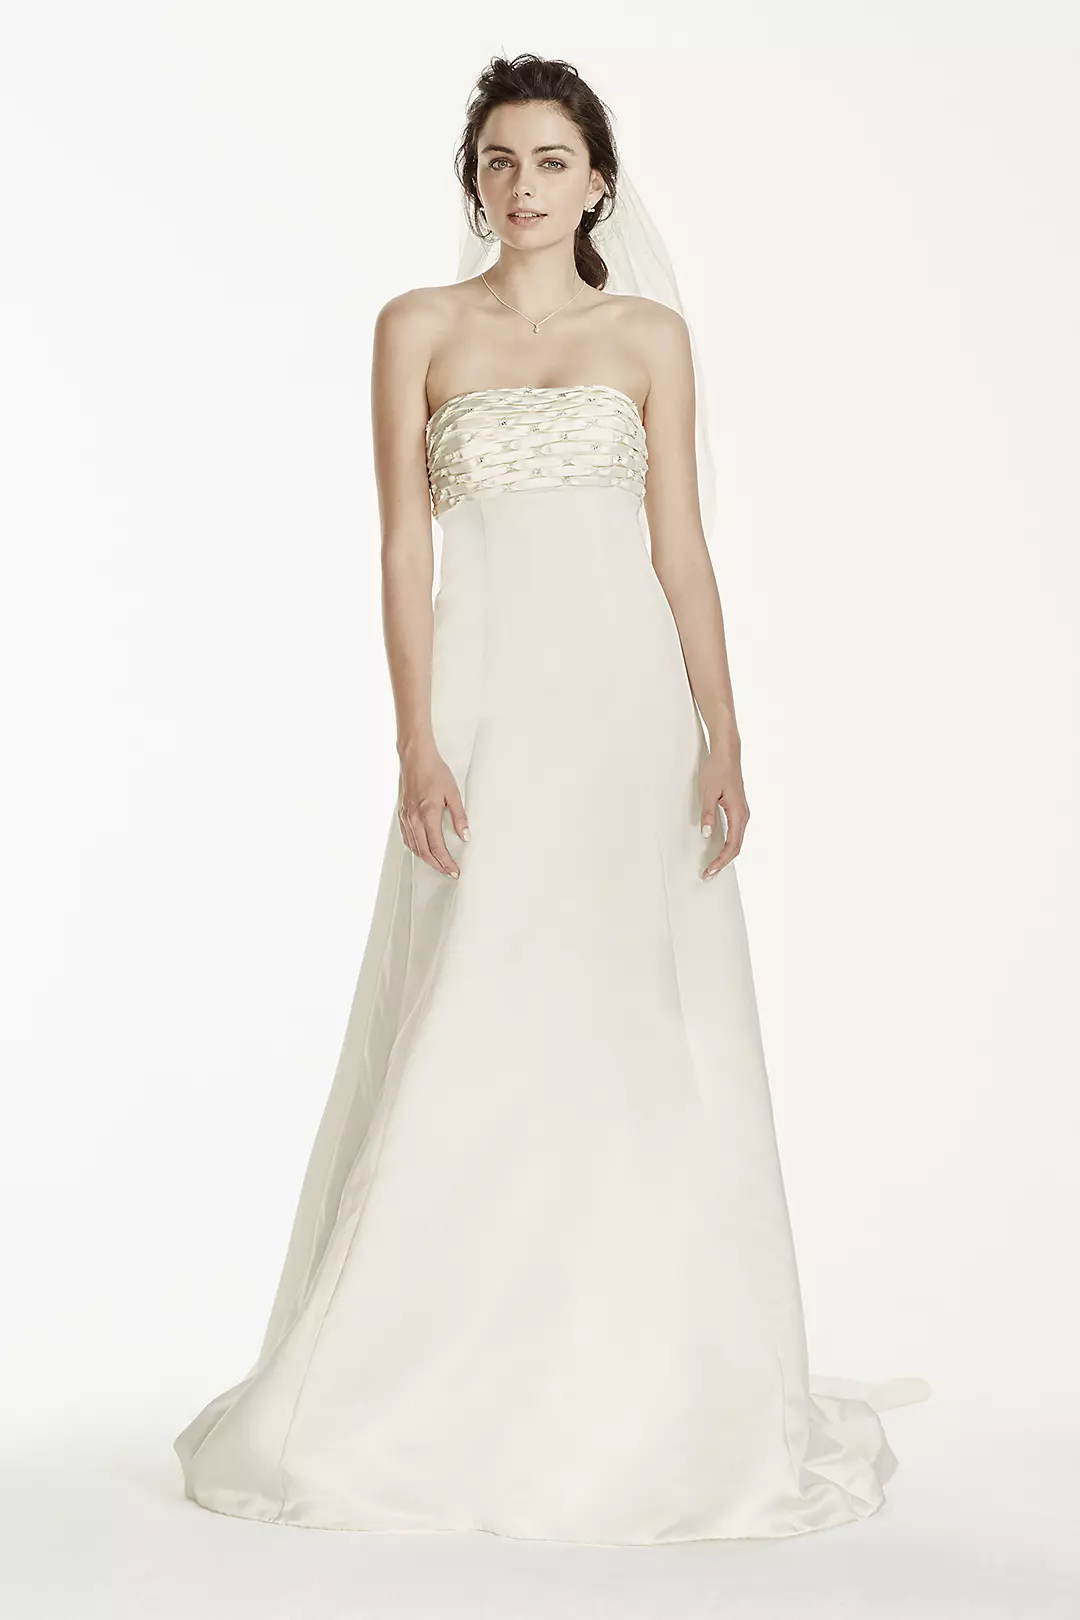 Jewel A-line Wedding Dress with Watteau Train Image